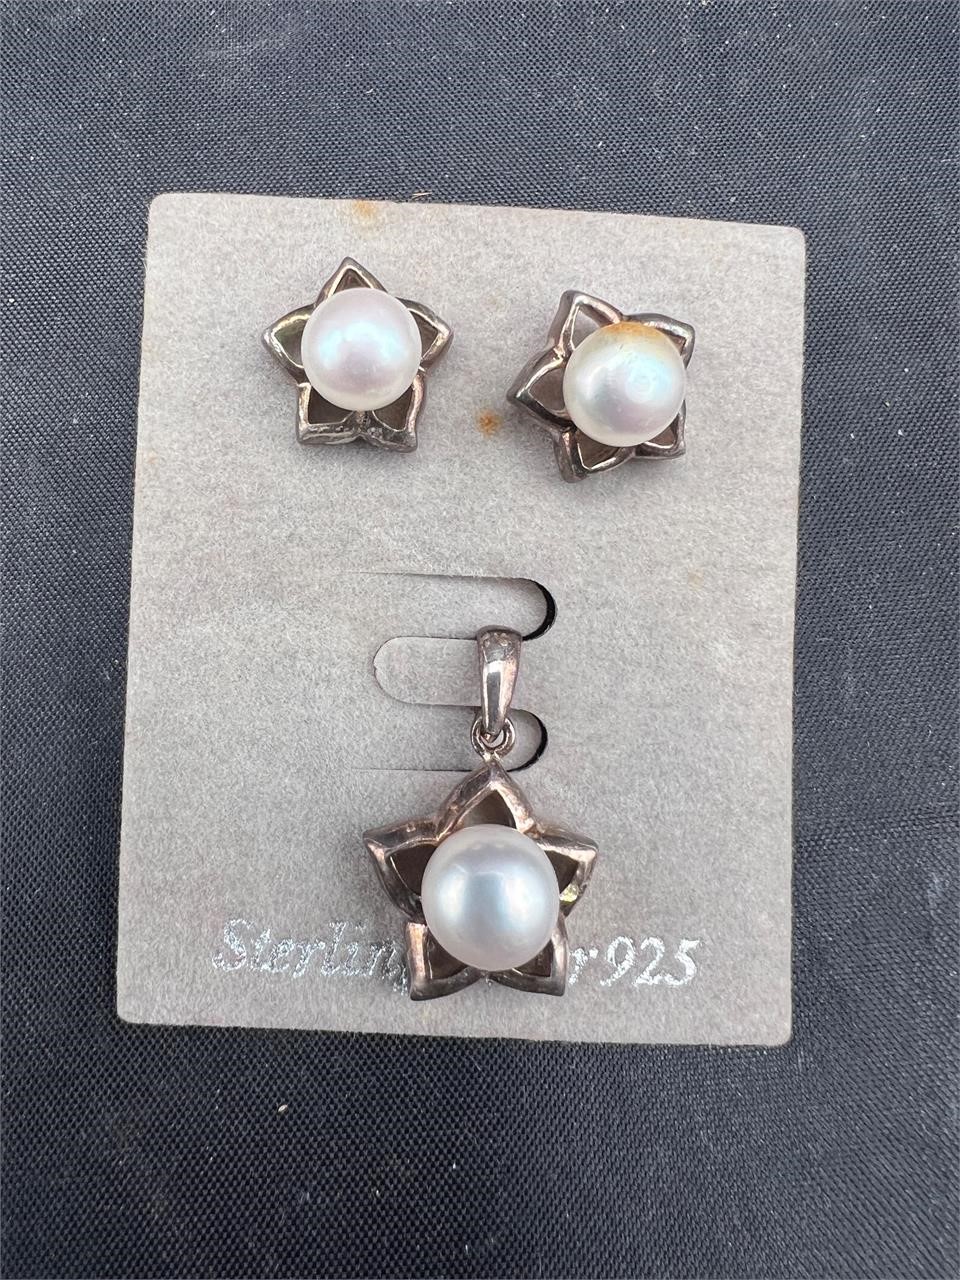 Sterling silver vintage earrings & pendant